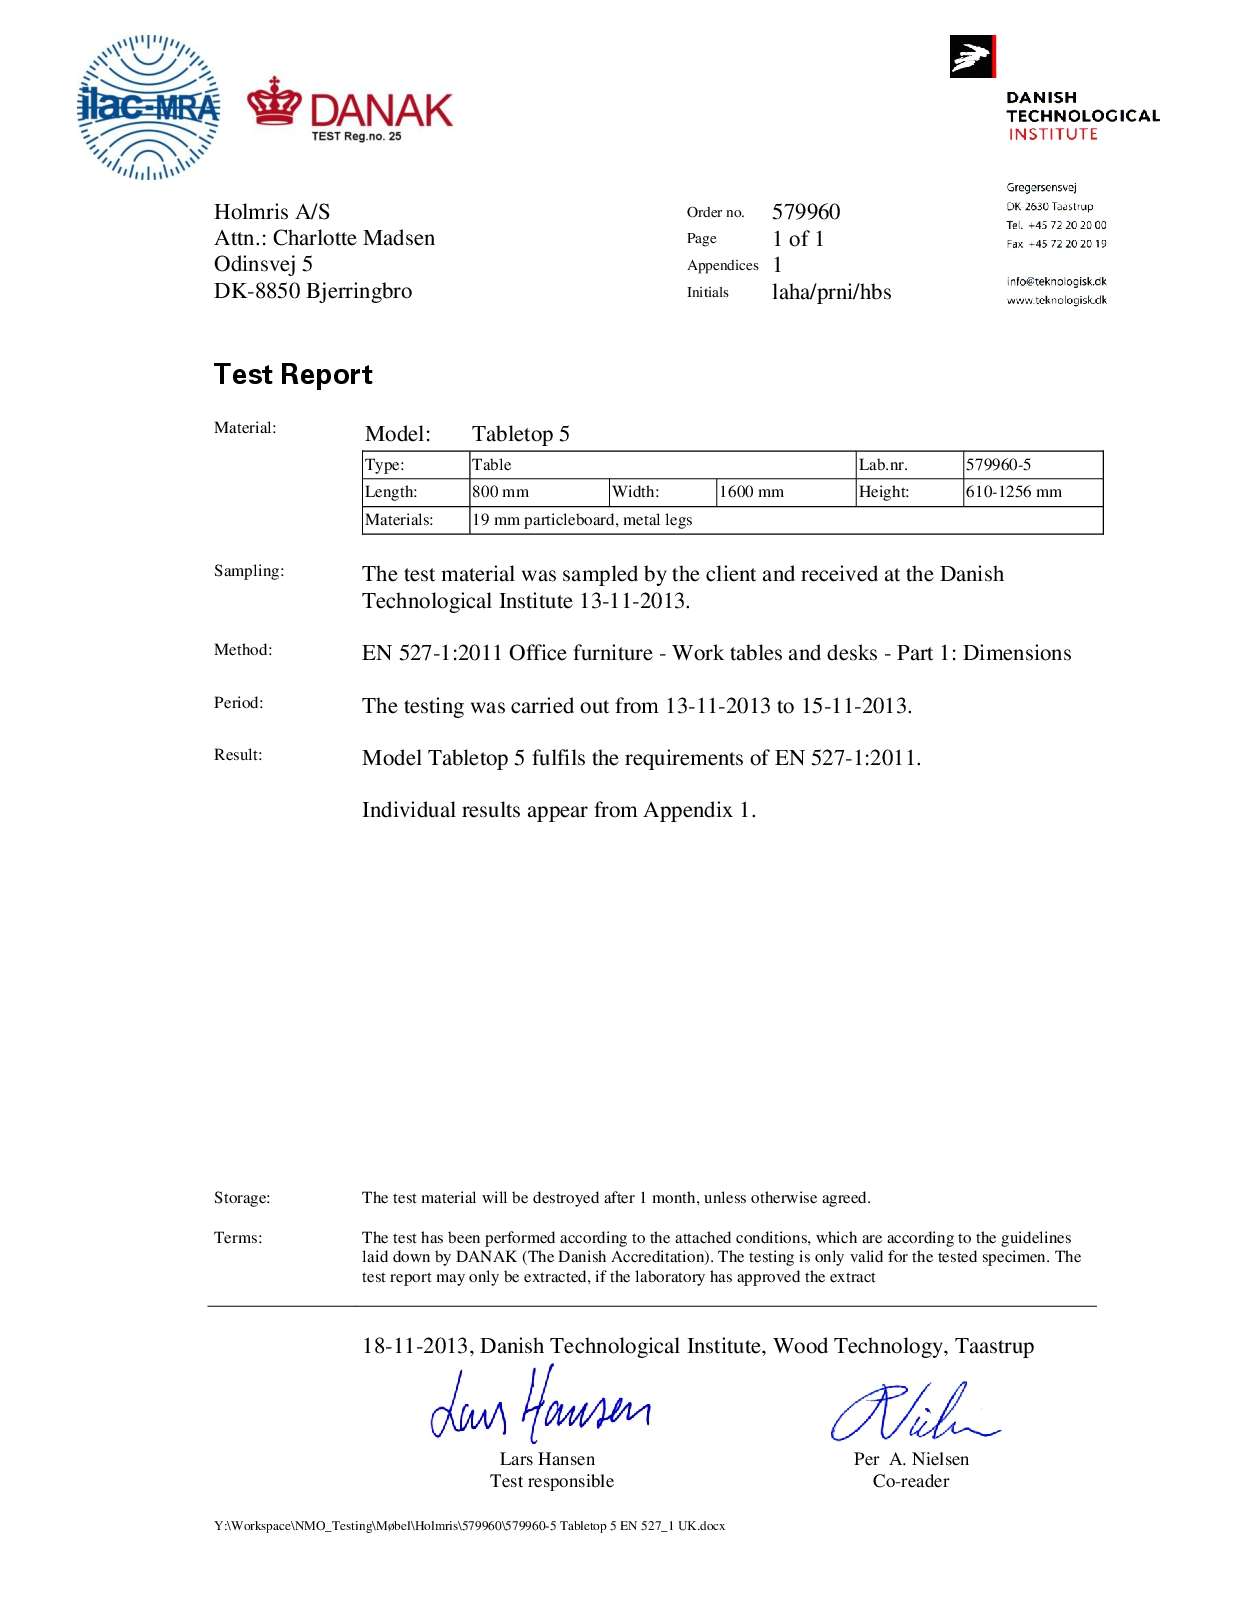 Test report - Desk 800x1600 - EN 527-1